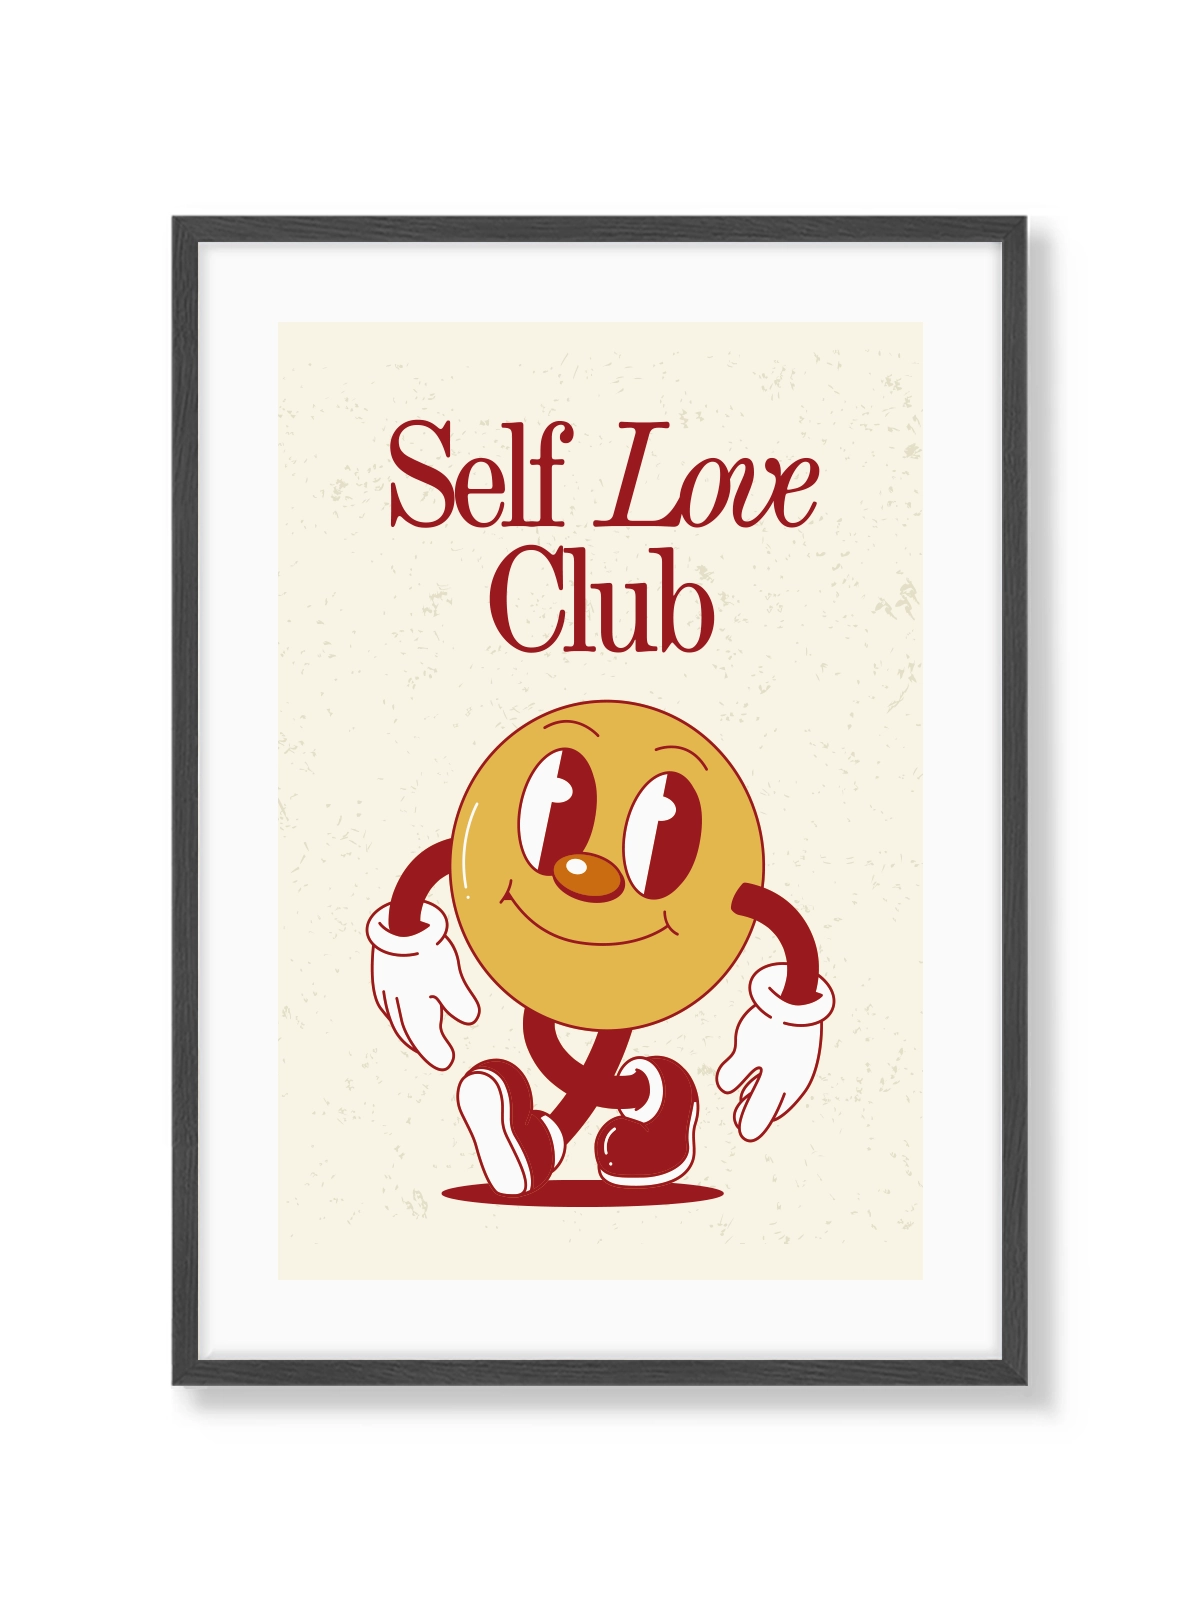 Self Club Love